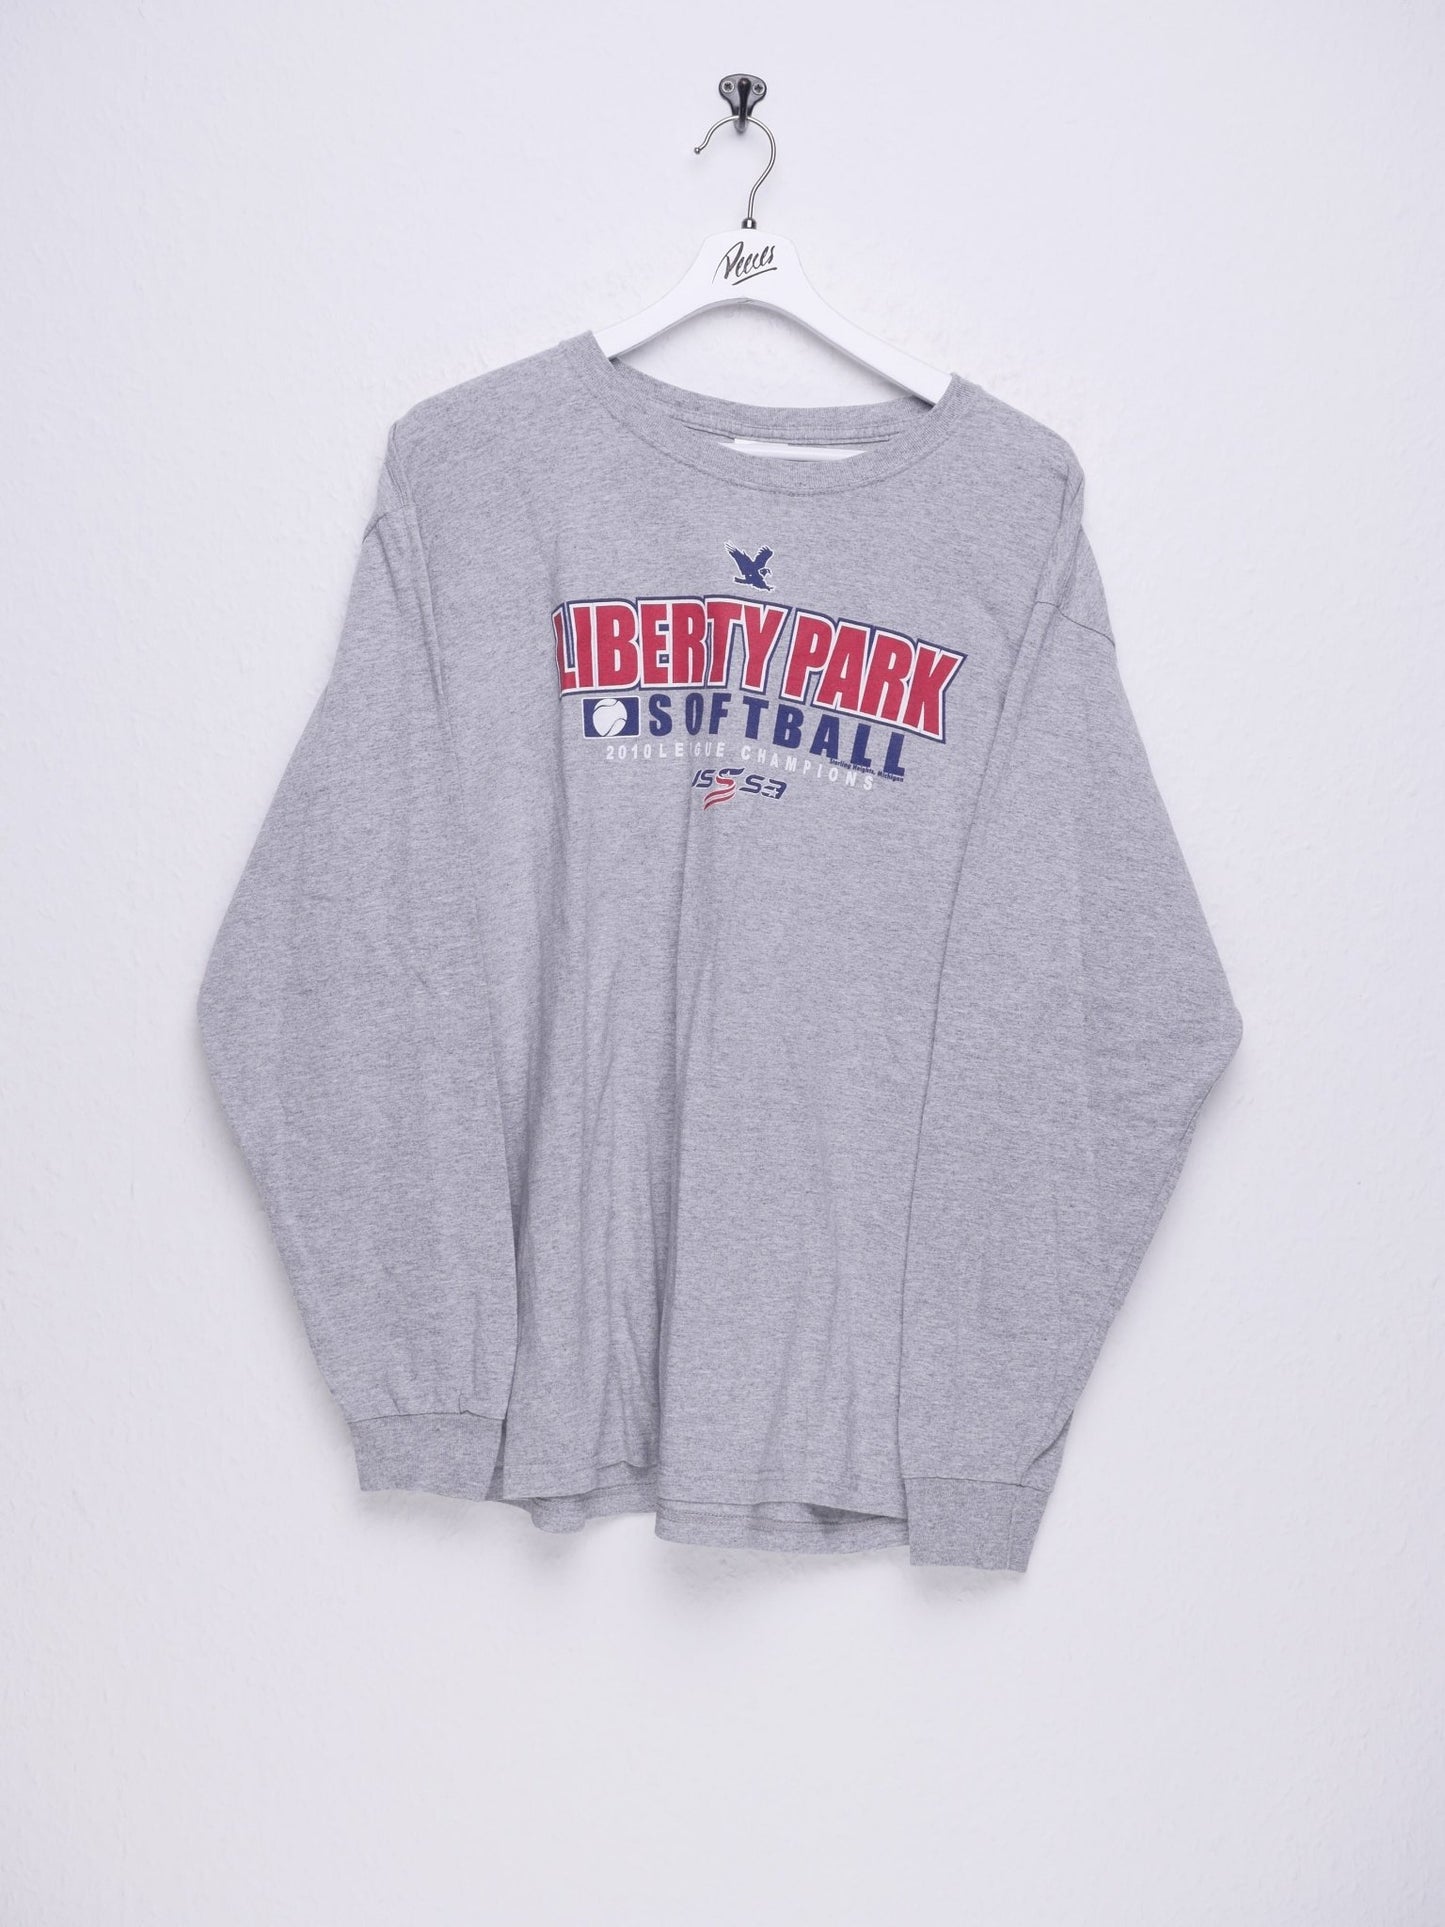 Liberty Park Softball printed Graphic grey L/S Shirt - Peeces